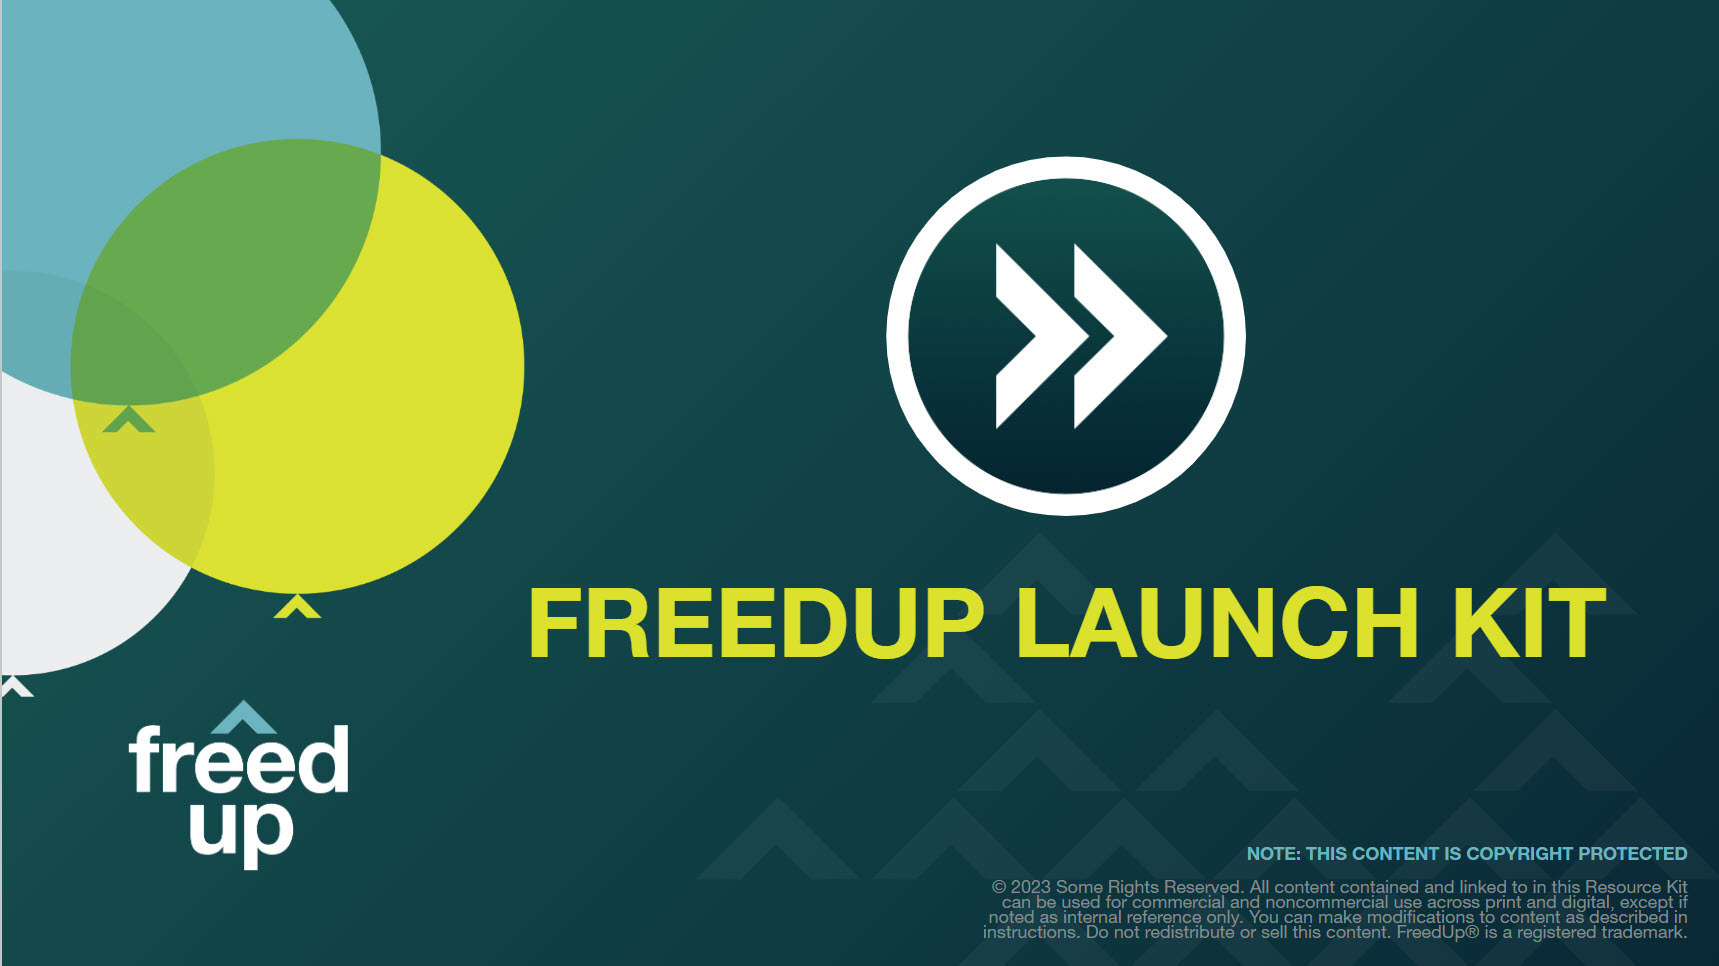 The FreedUp Launch Kit image